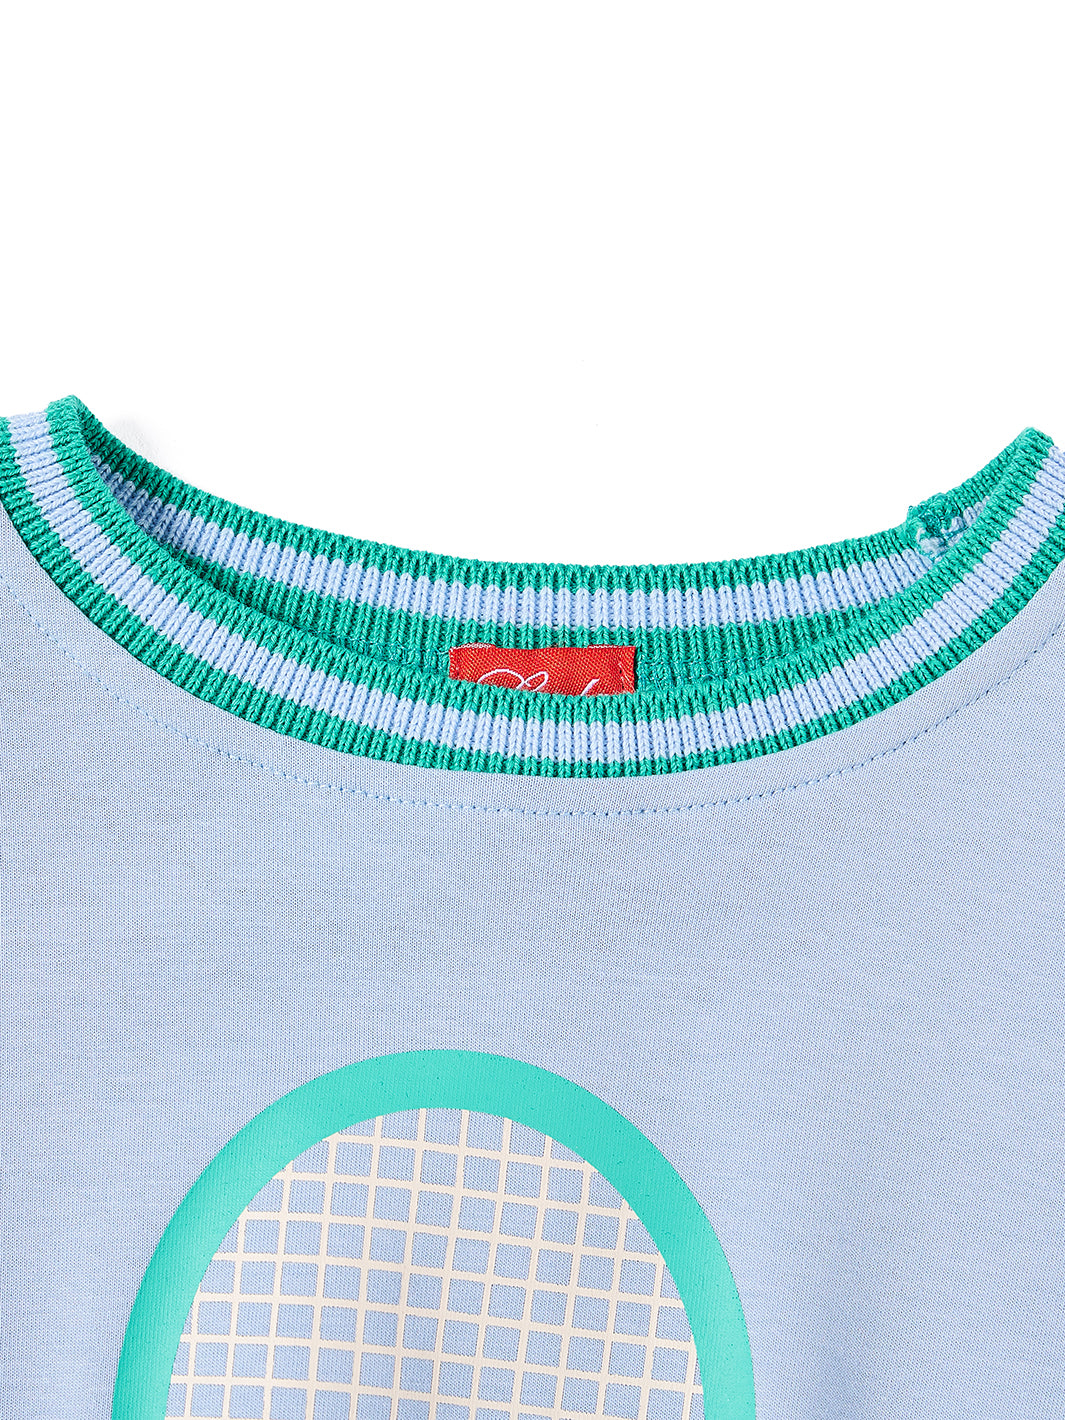 Tennis Racket Print Top - Sky Blue